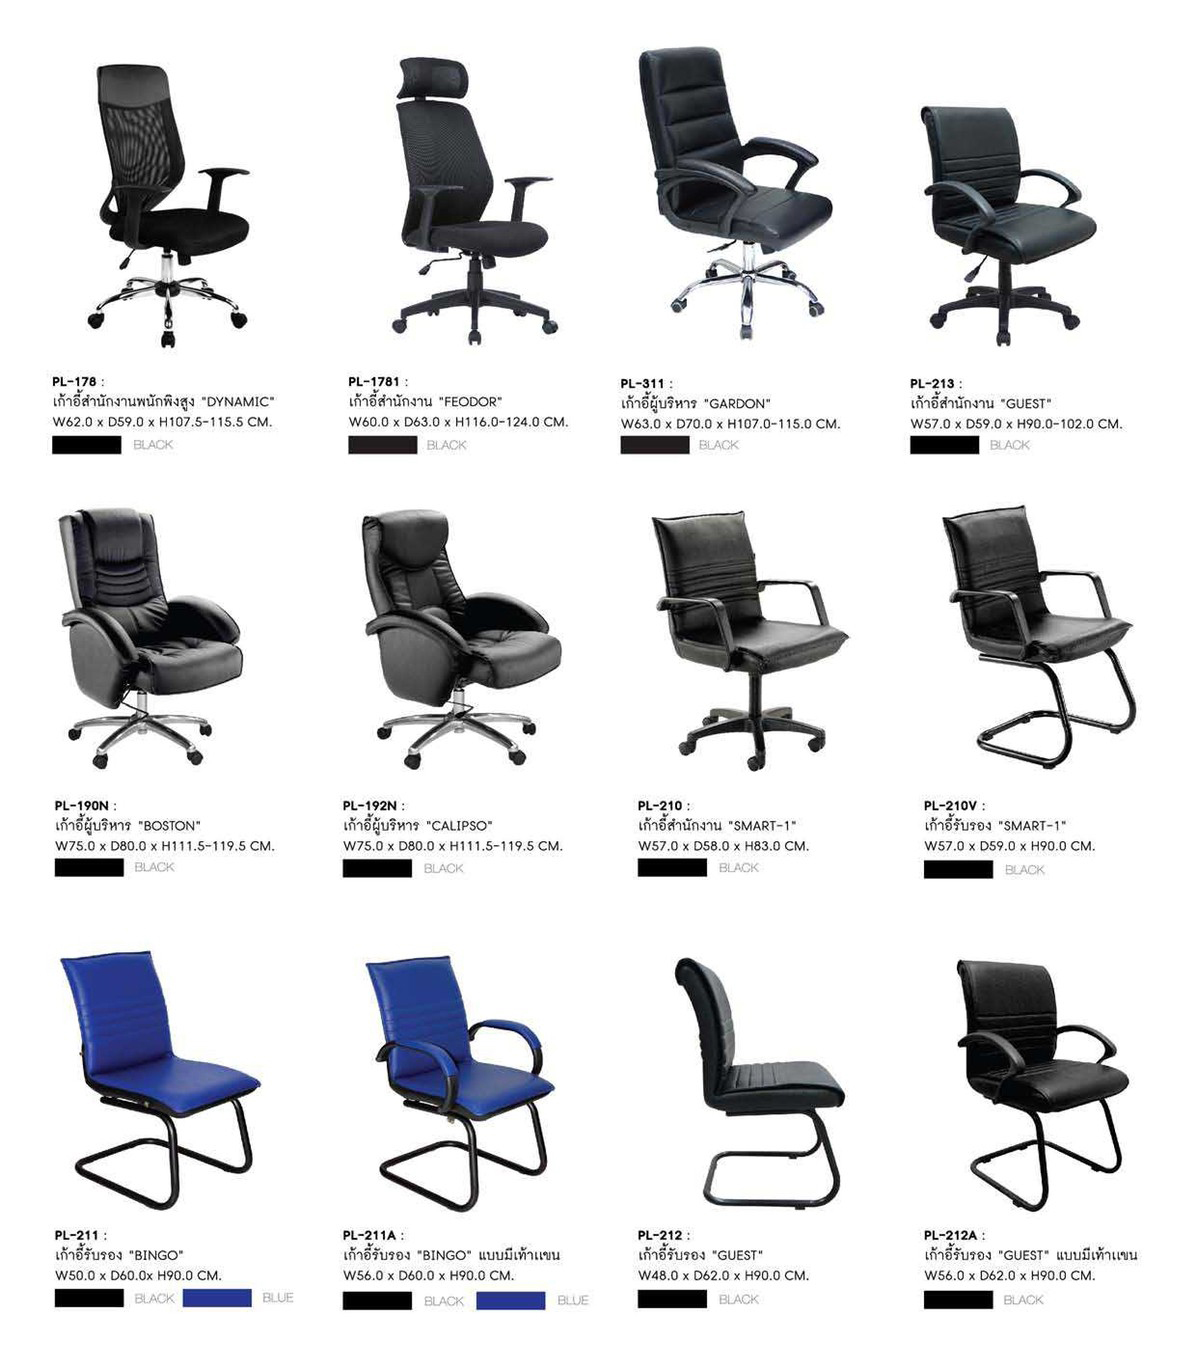 20001::PL-210::เก้าอี้สำนักงาน SMART-1 ก570xล580xส830 มม. (หลังสปริง) สีดำ เก้าอี้สำนักงาน SURE